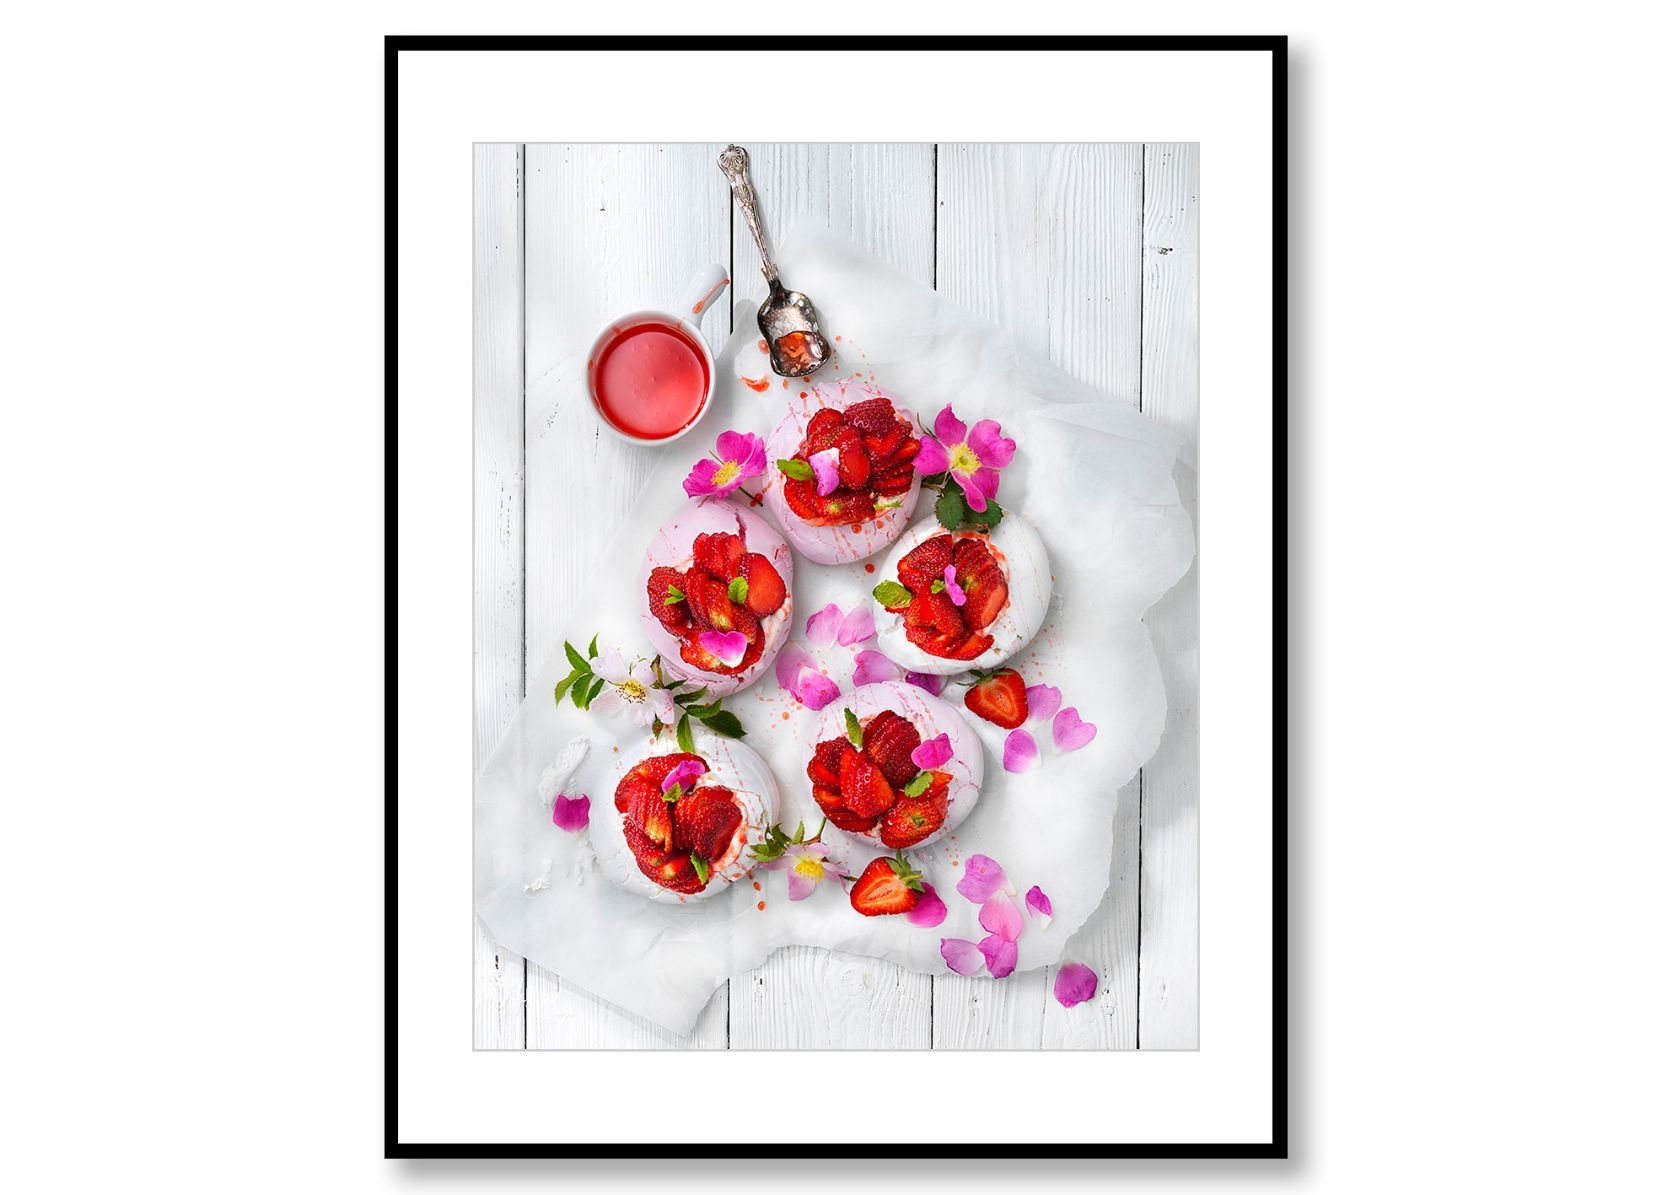 Meringues with strawberries. Food Art. Prints for sale. Photo by Fredrik Rege